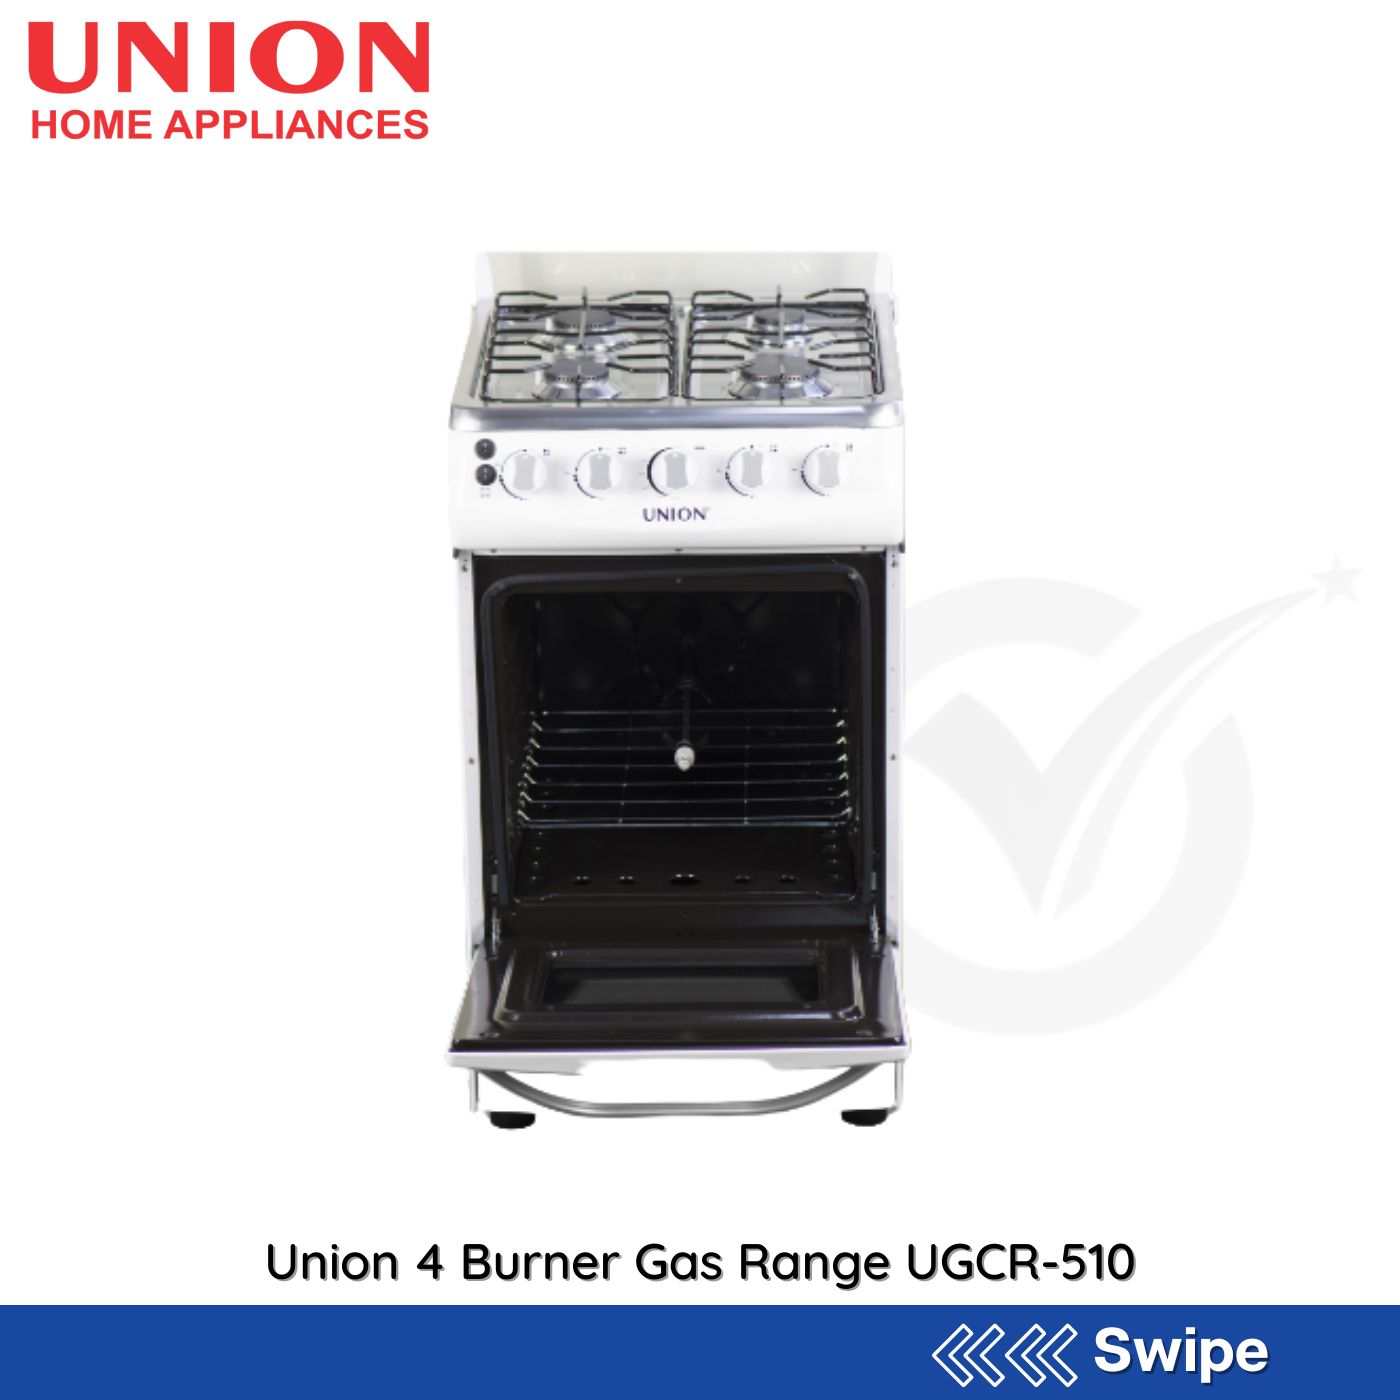 Union 4 Burner Gas Range UGCR-510